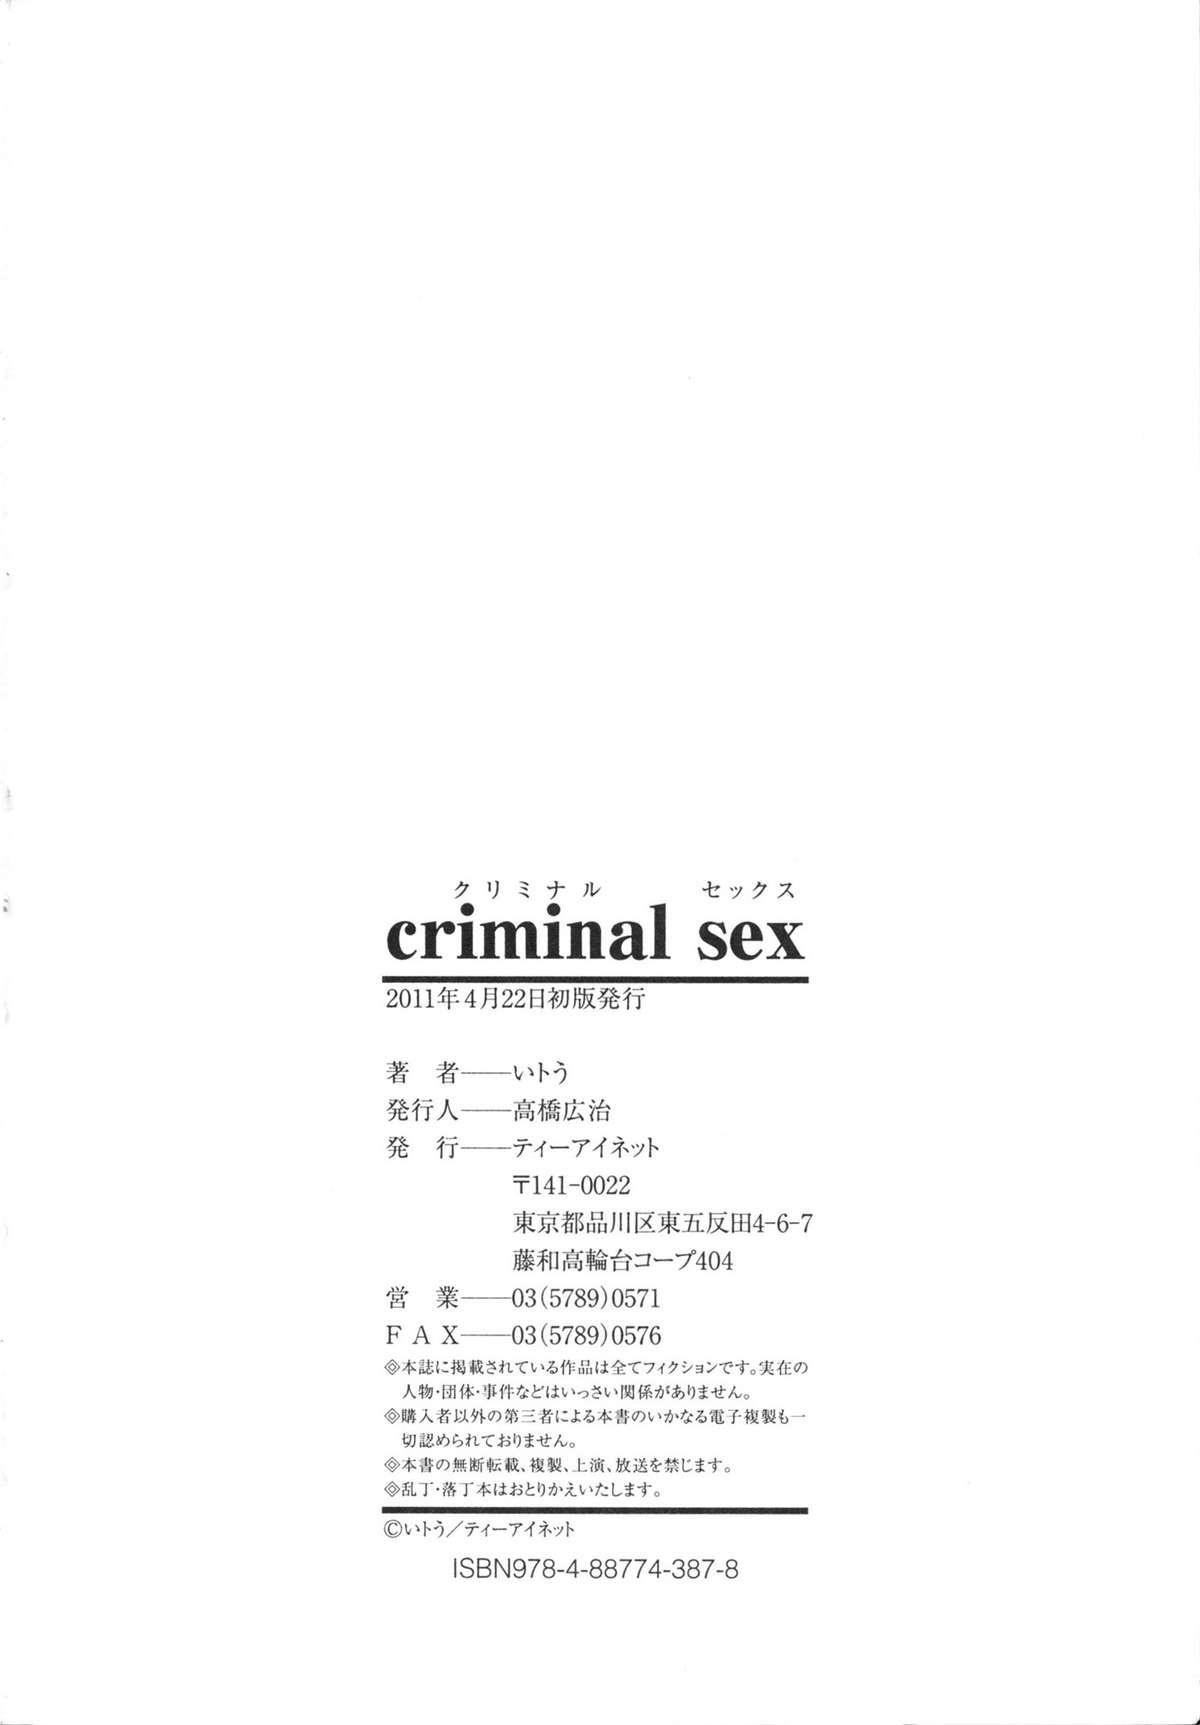 criminal sex 199